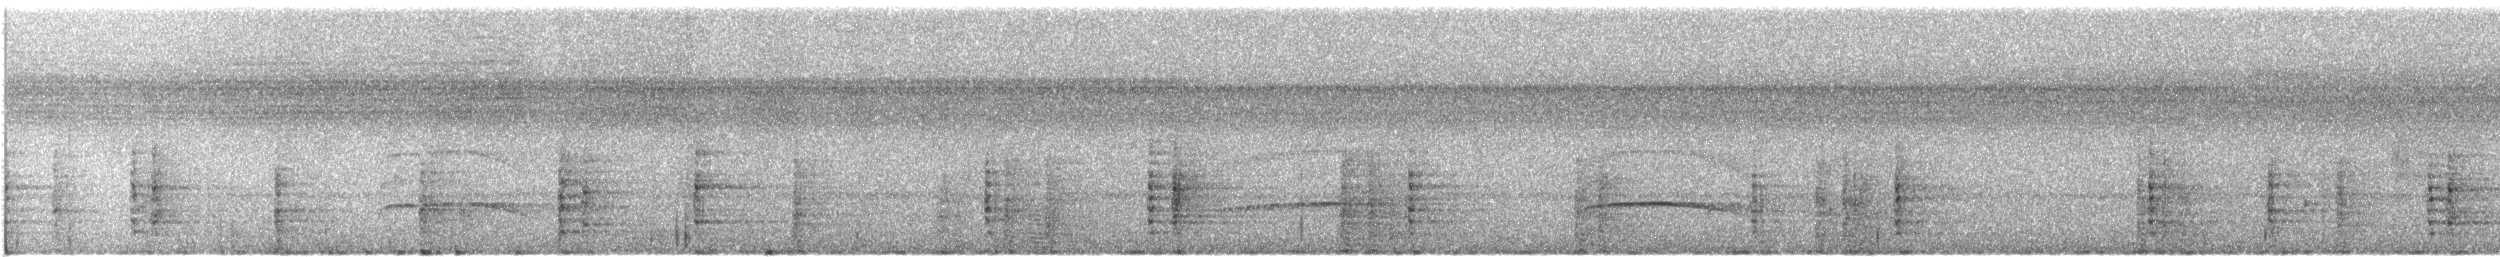 Kara Kanatlı Borazankuşu (obscura) - ML194567101